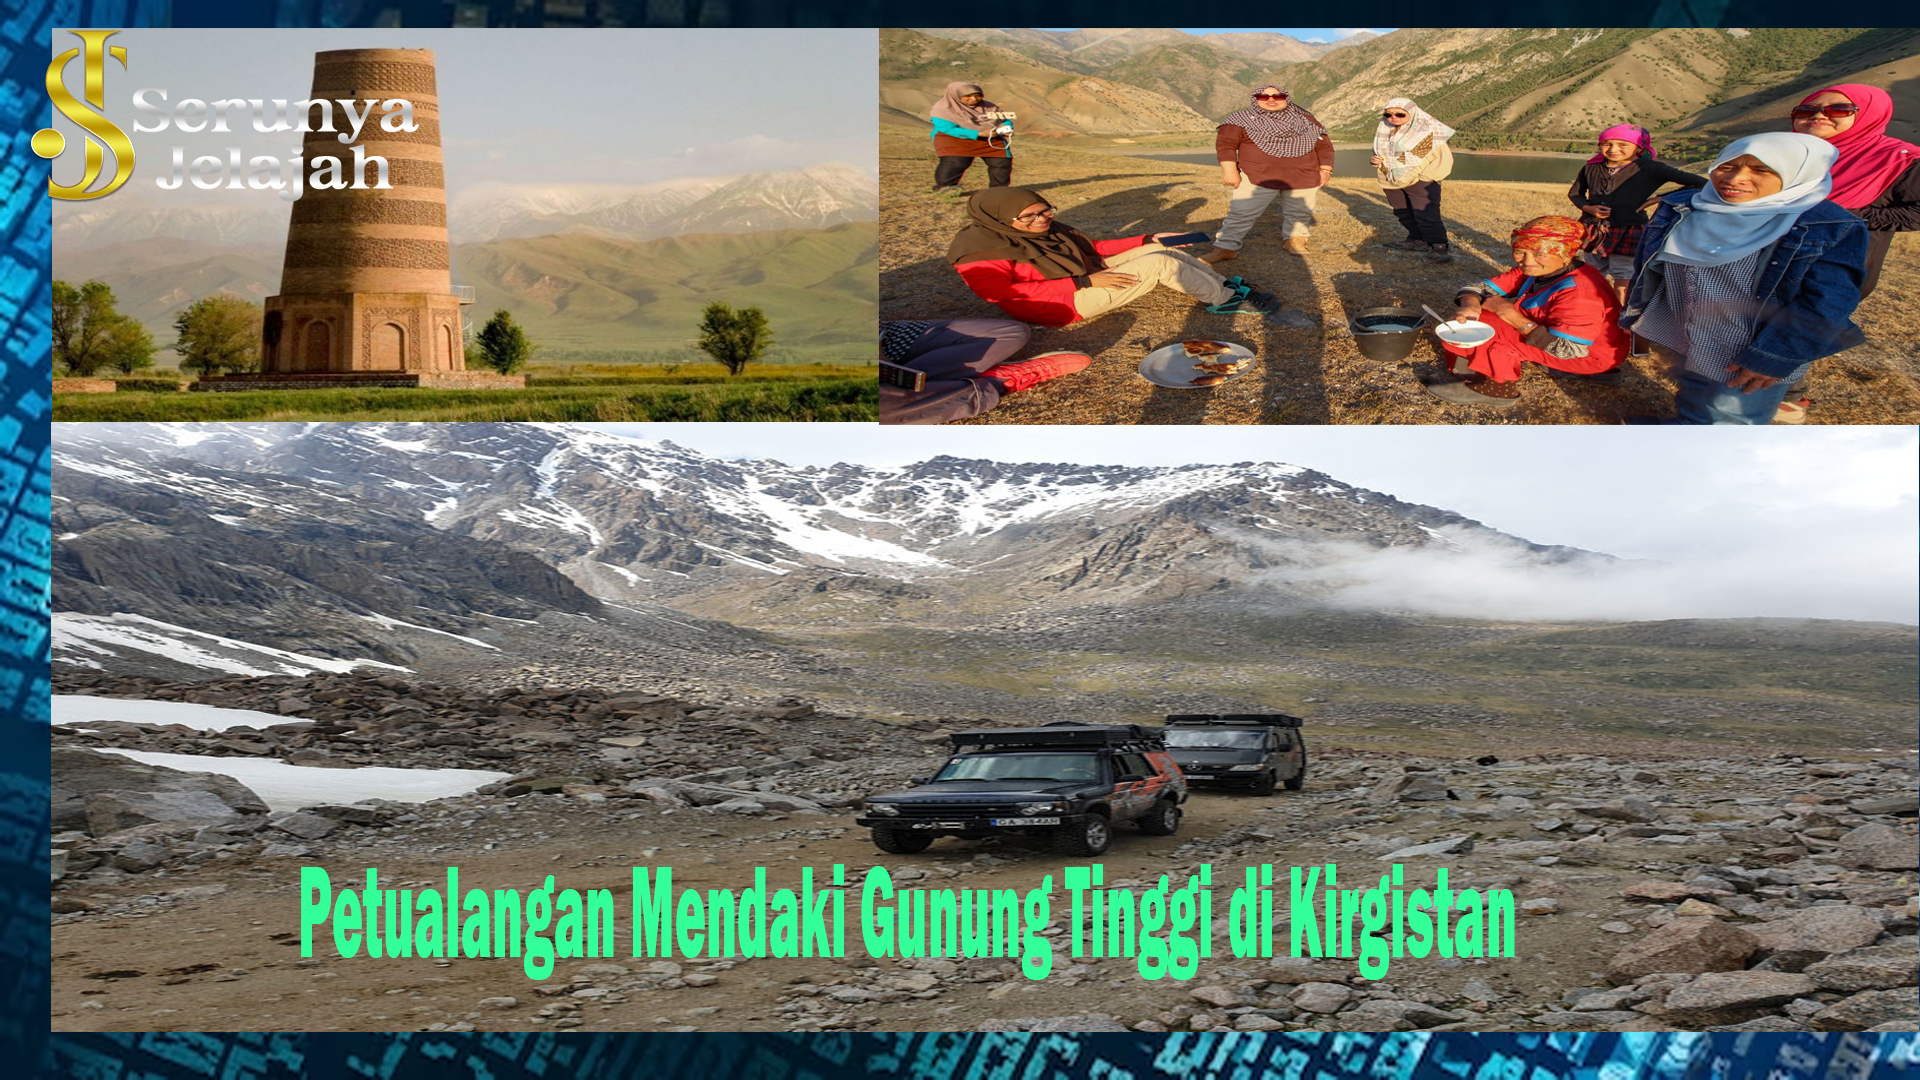 Petualangan Mendaki Gunung Tinggi di Kirgistan